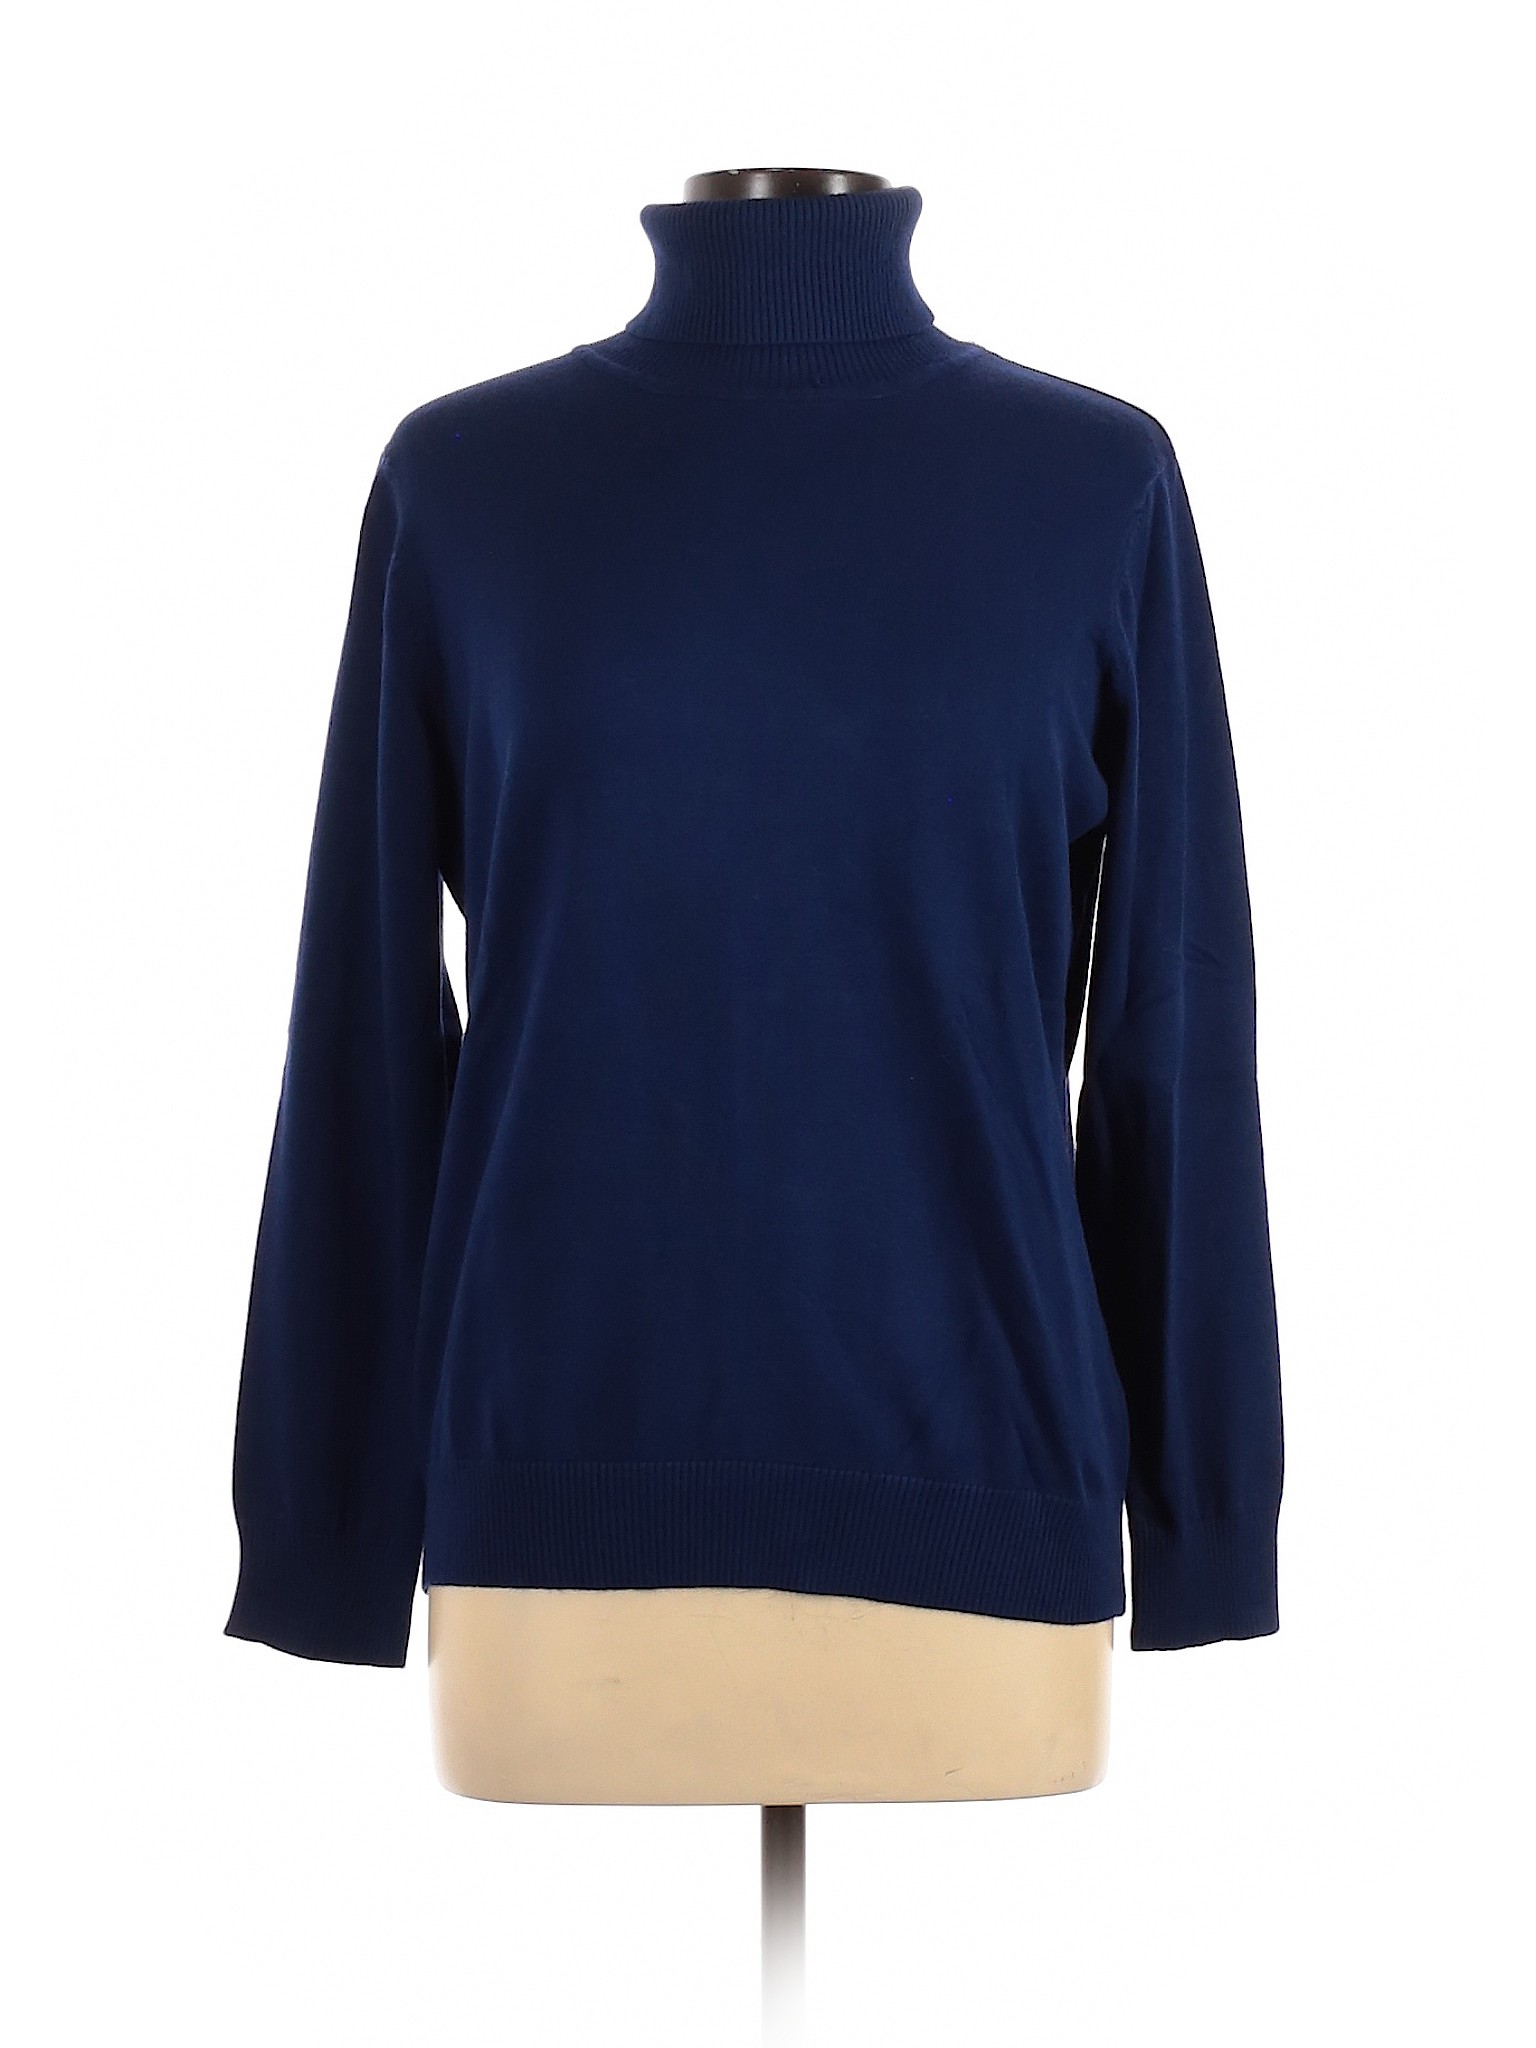 Joseph A. Women Blue Turtleneck Sweater XL | eBay